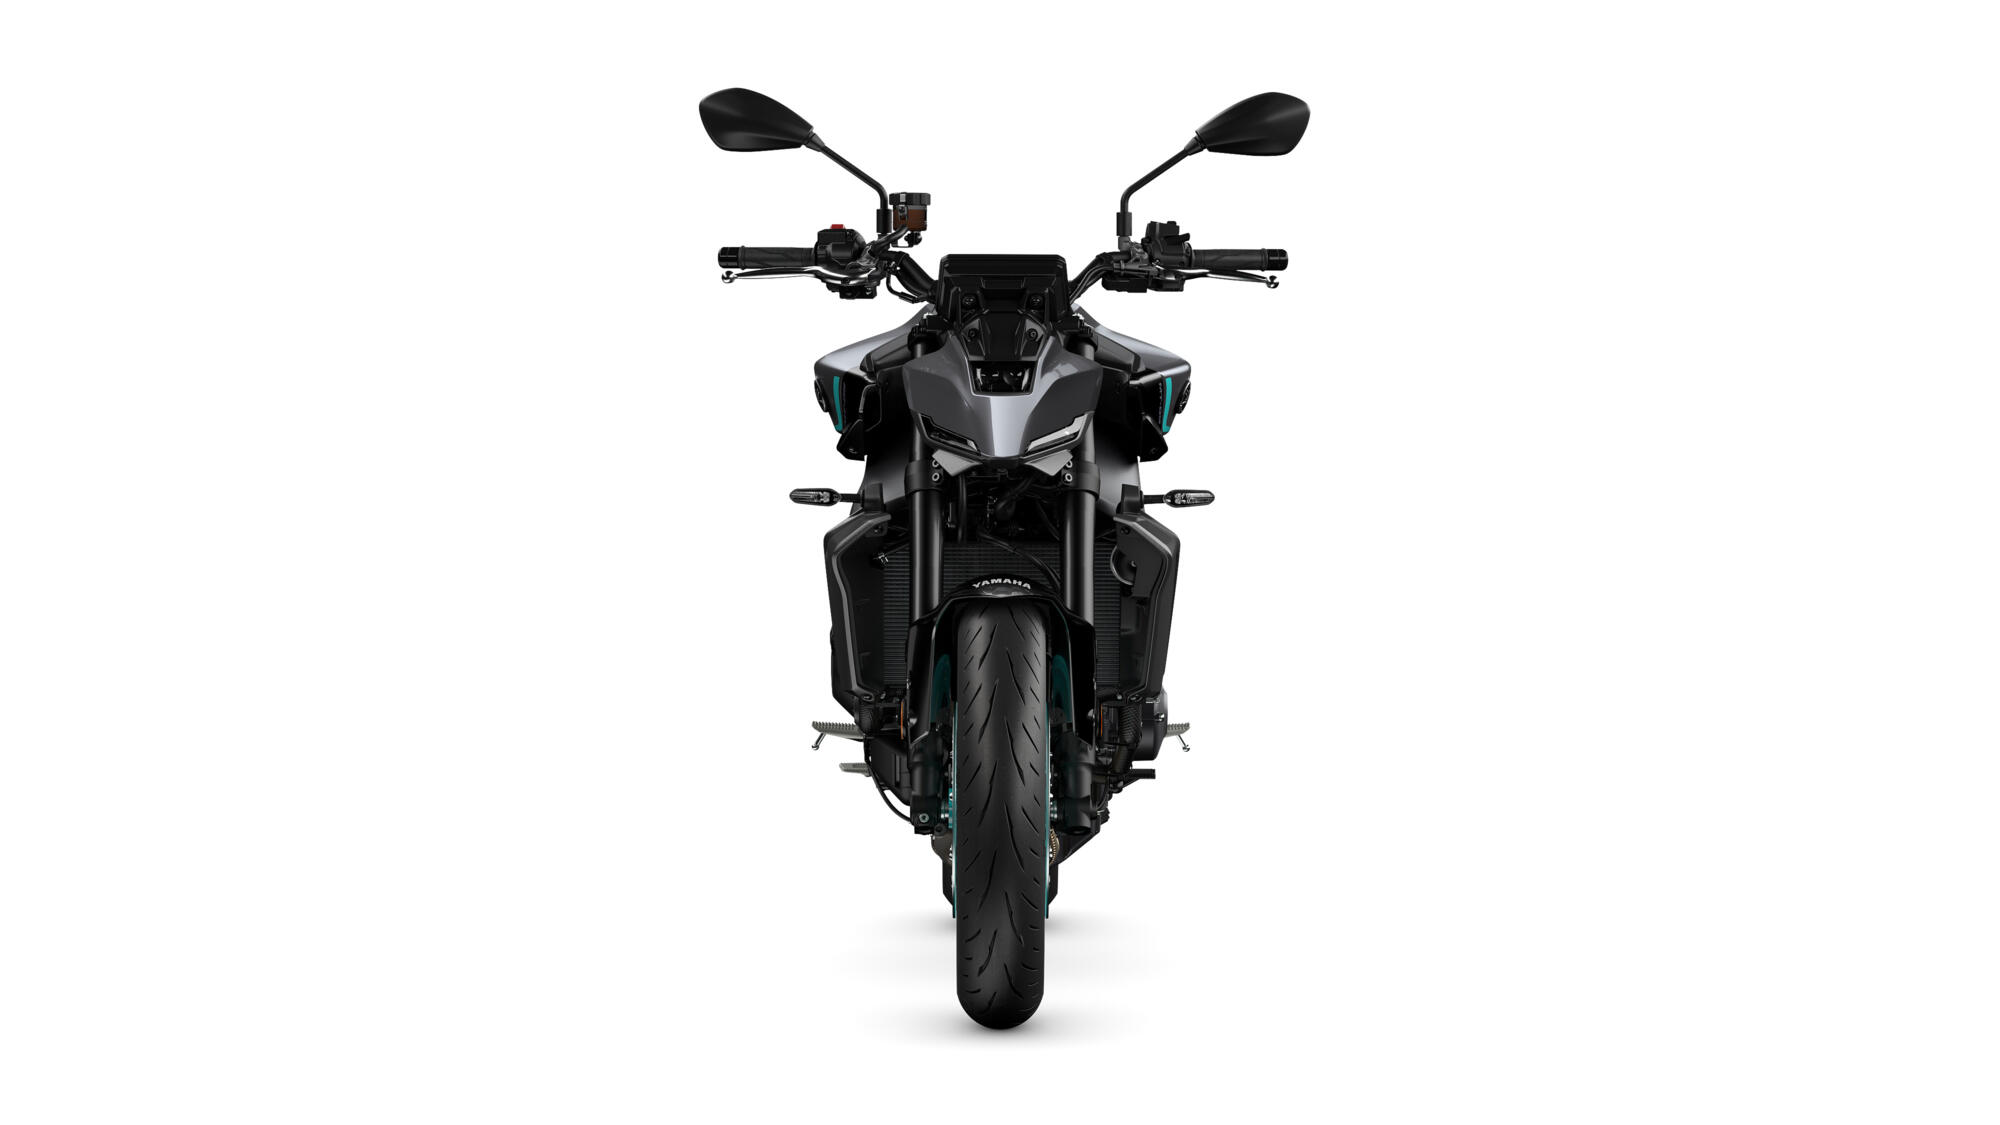 MT-09 - Motorcycles - Yamaha Motor